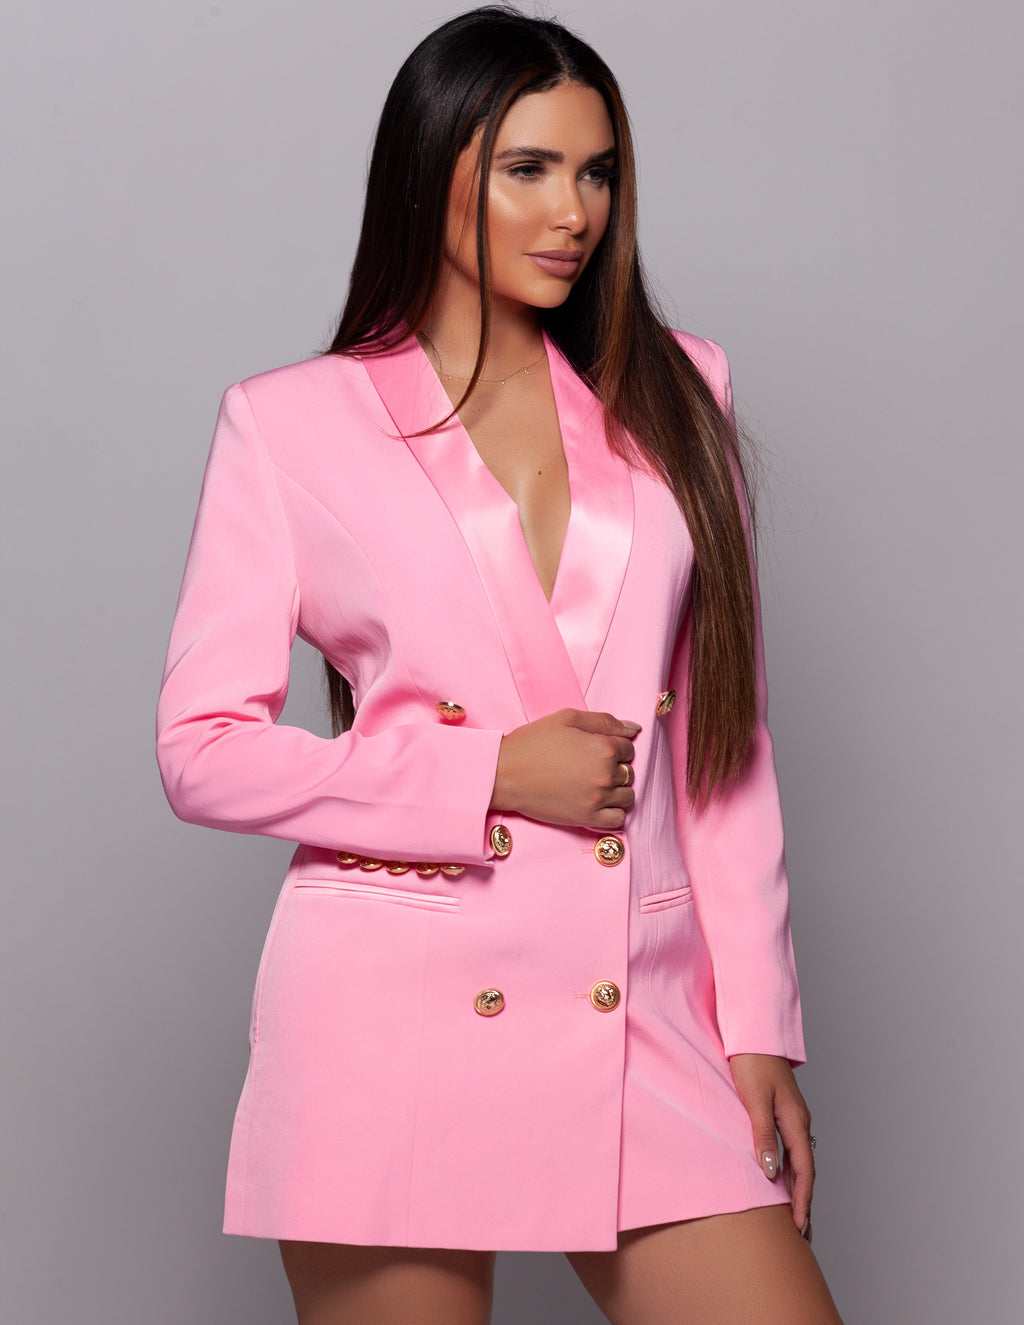 blazer pink dress